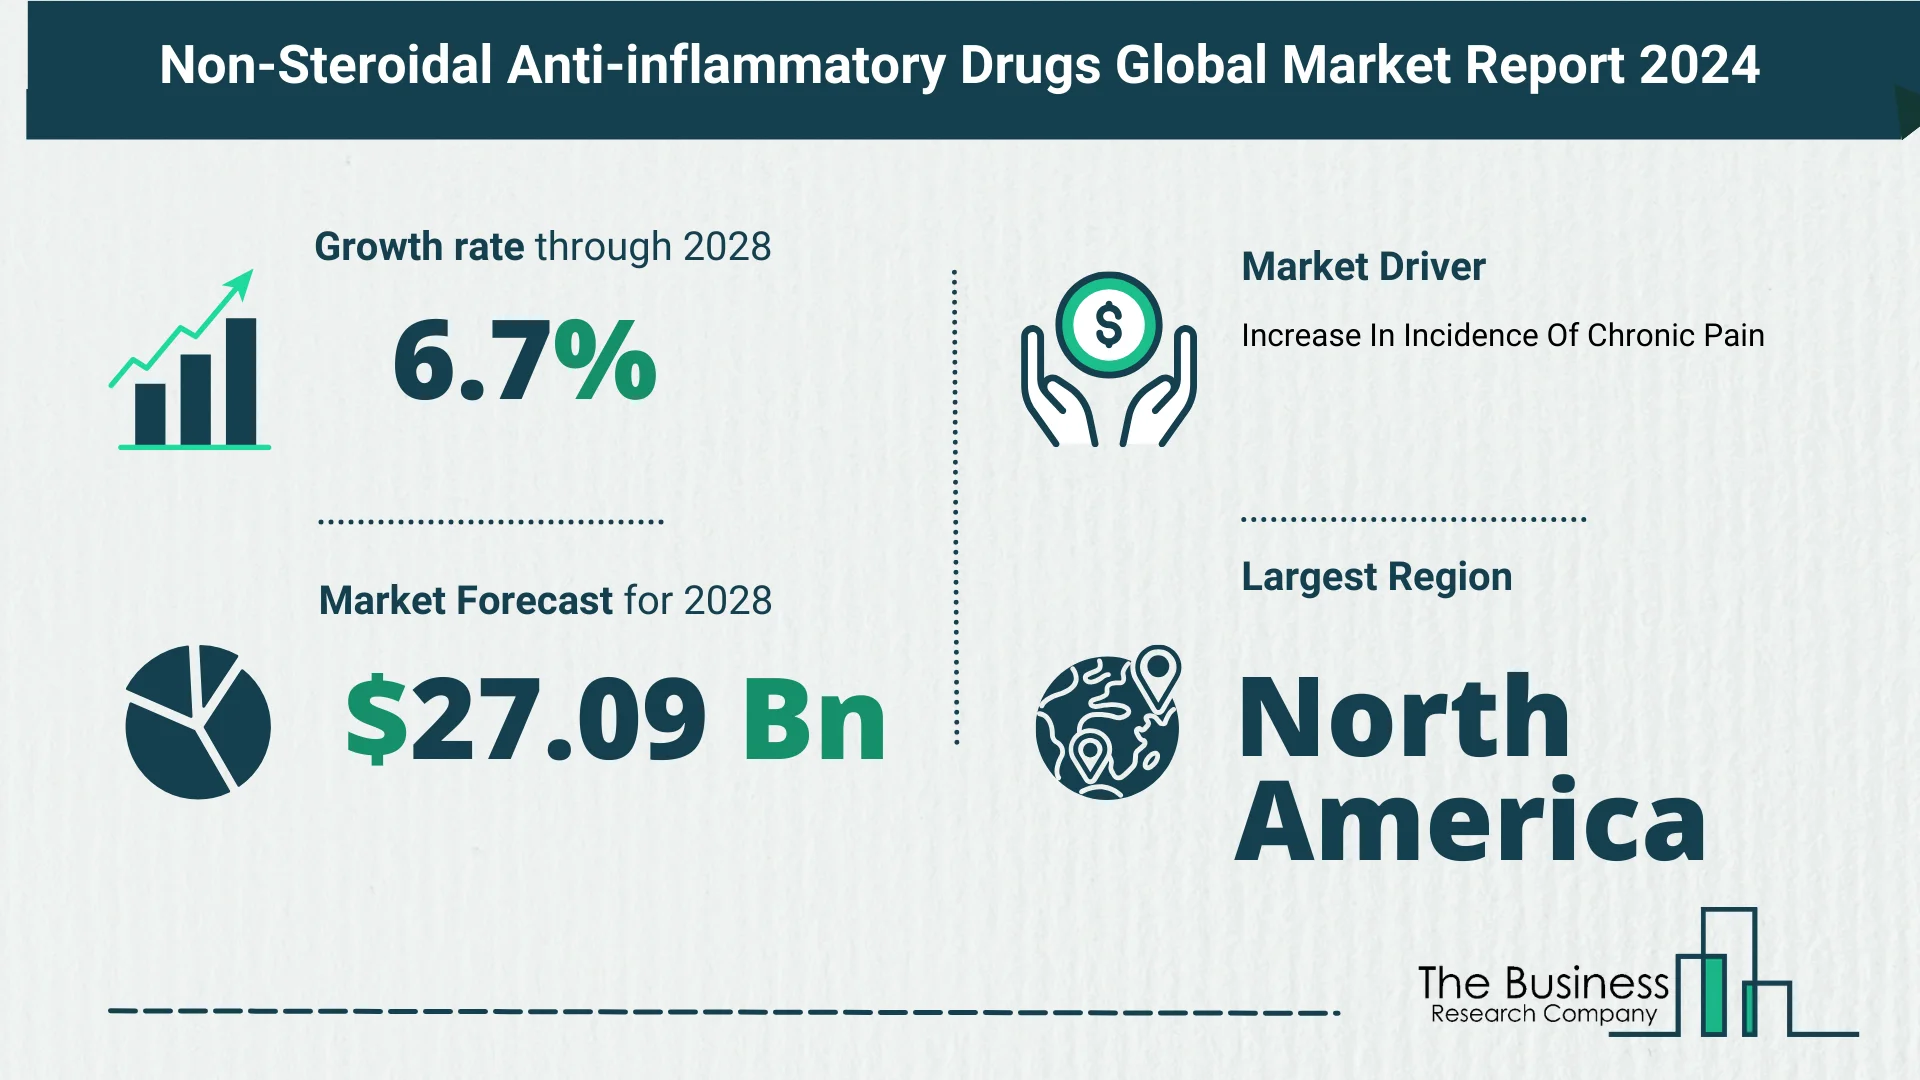 Global Non-Steroidal Anti-inflammatory Drugs Market Size